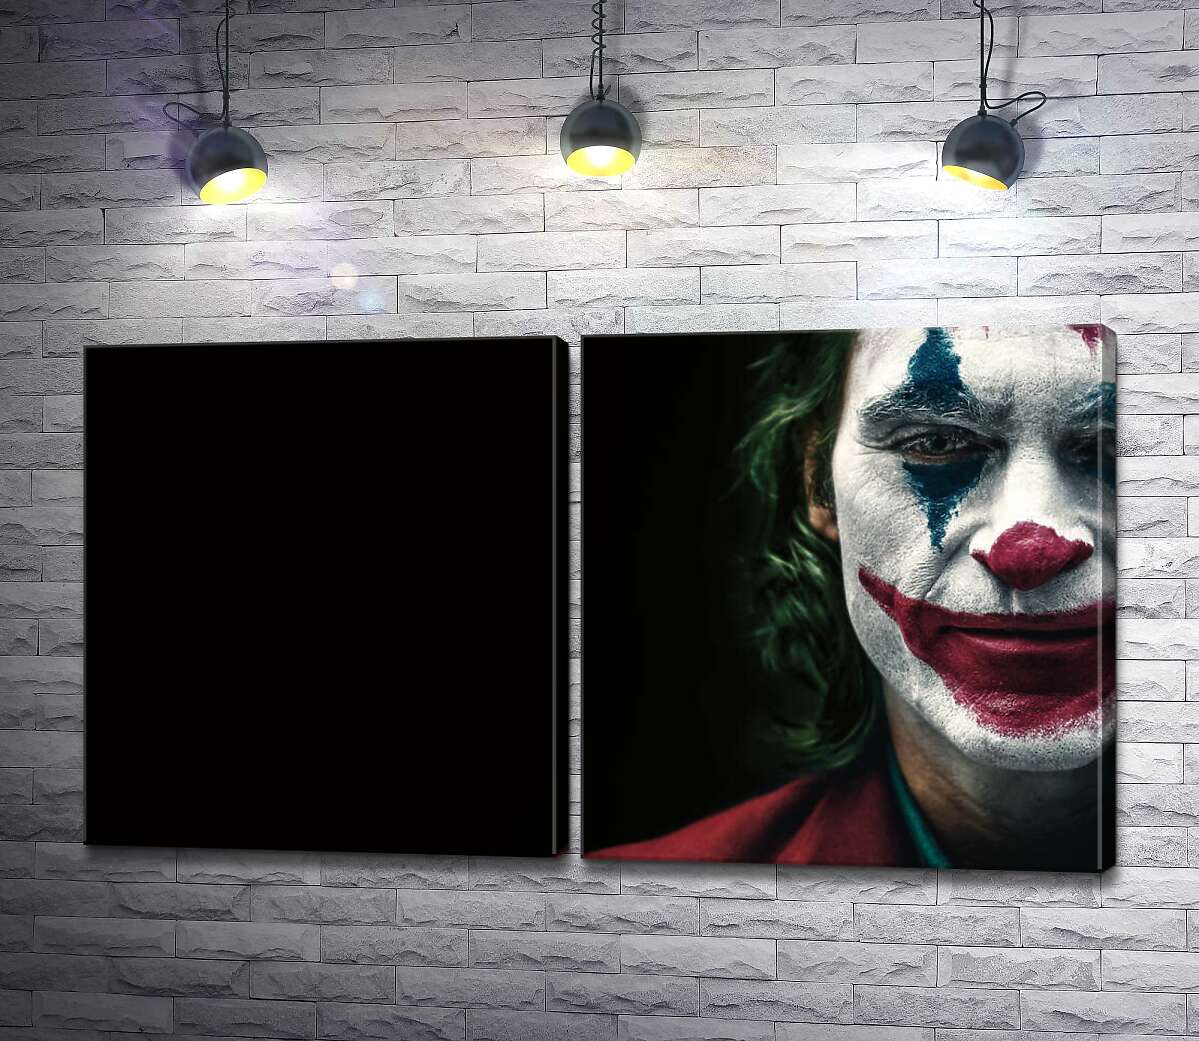 модульная картина Джокер (Joker) накрашен слоями грима